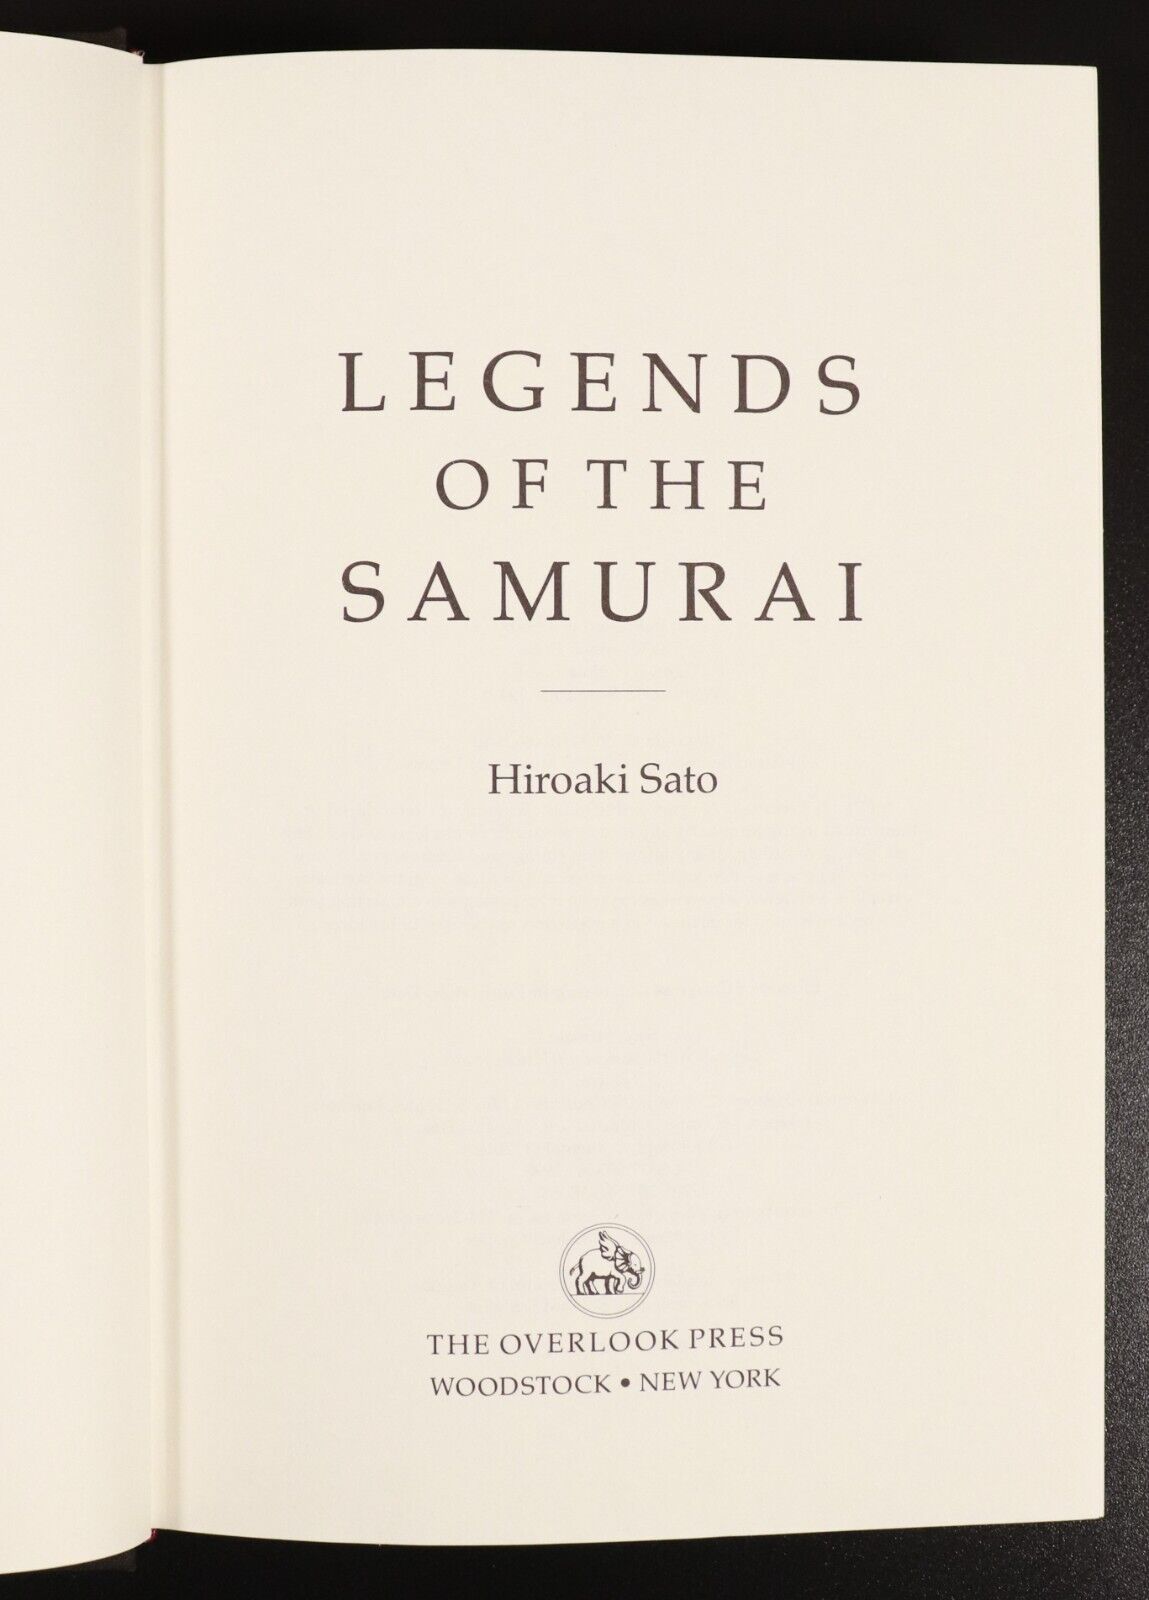 1995 Legends Of The Samurai by Hiroaki Sato Japanese History Of The Samurai Book